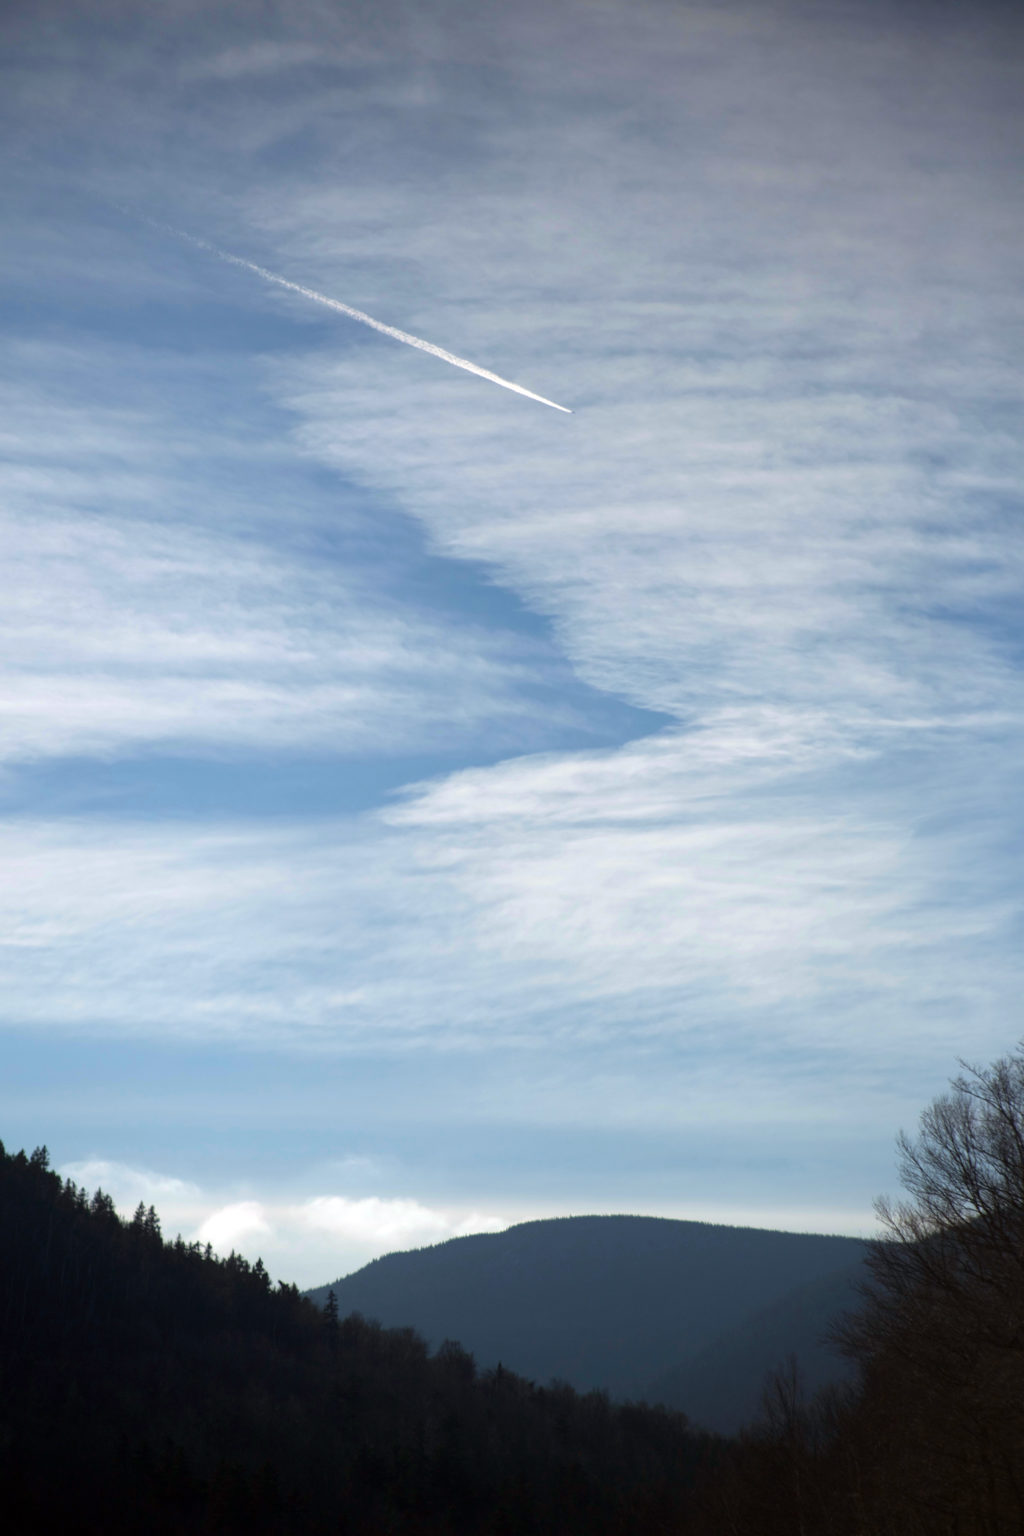 Jet Trail Across a Cloudy Sky